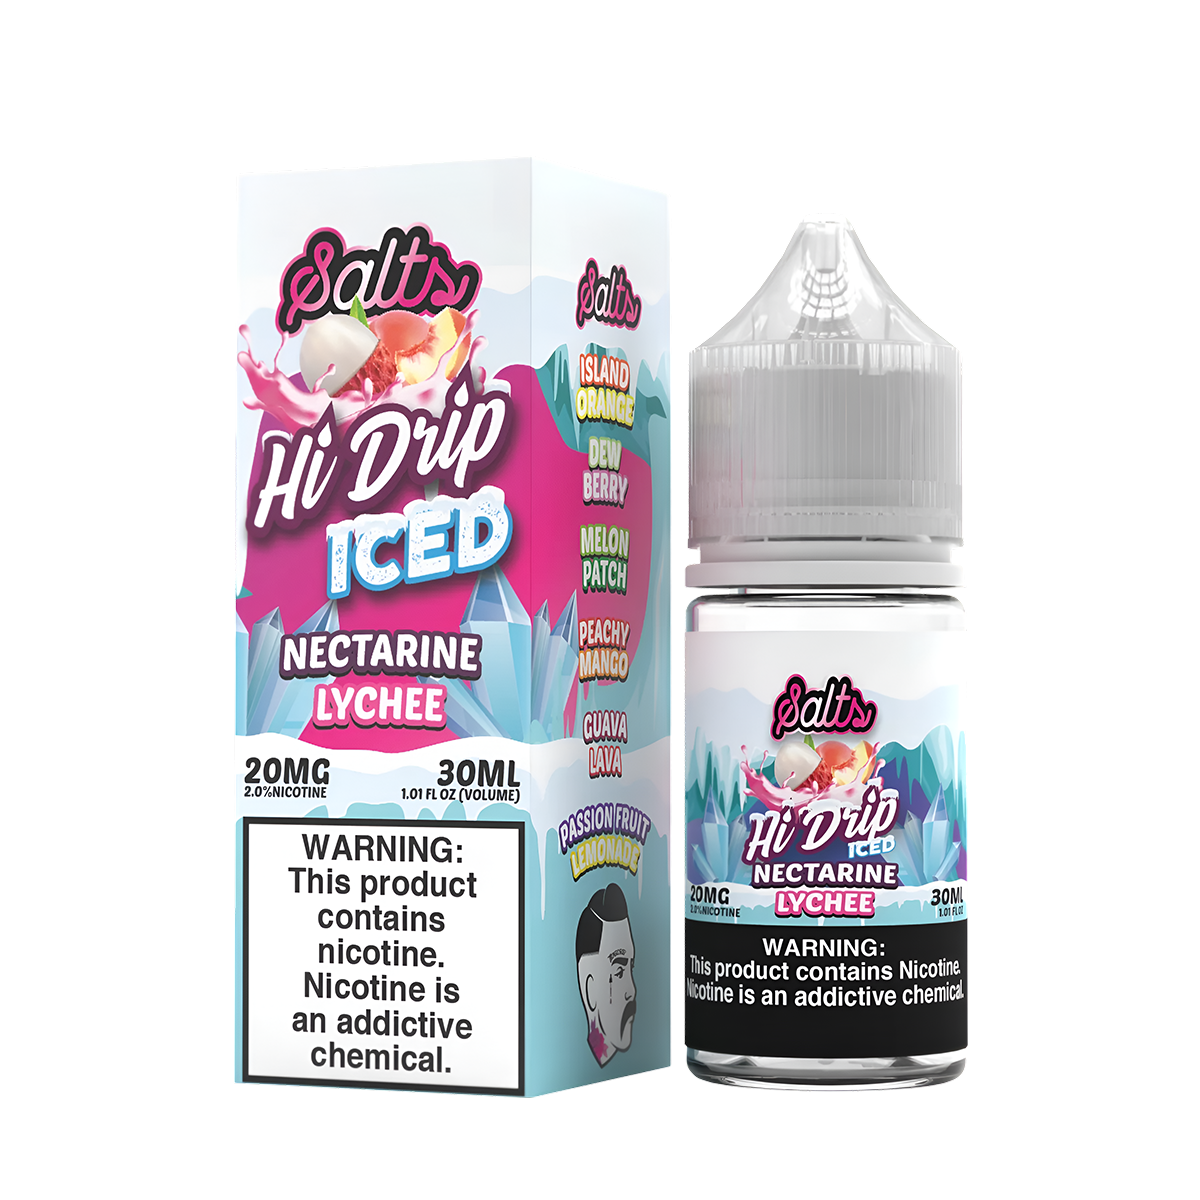 Hi Drip Iced Salt Nicotine Vape Juice 20 Mg 30 Ml Nectarine Lychee Iced